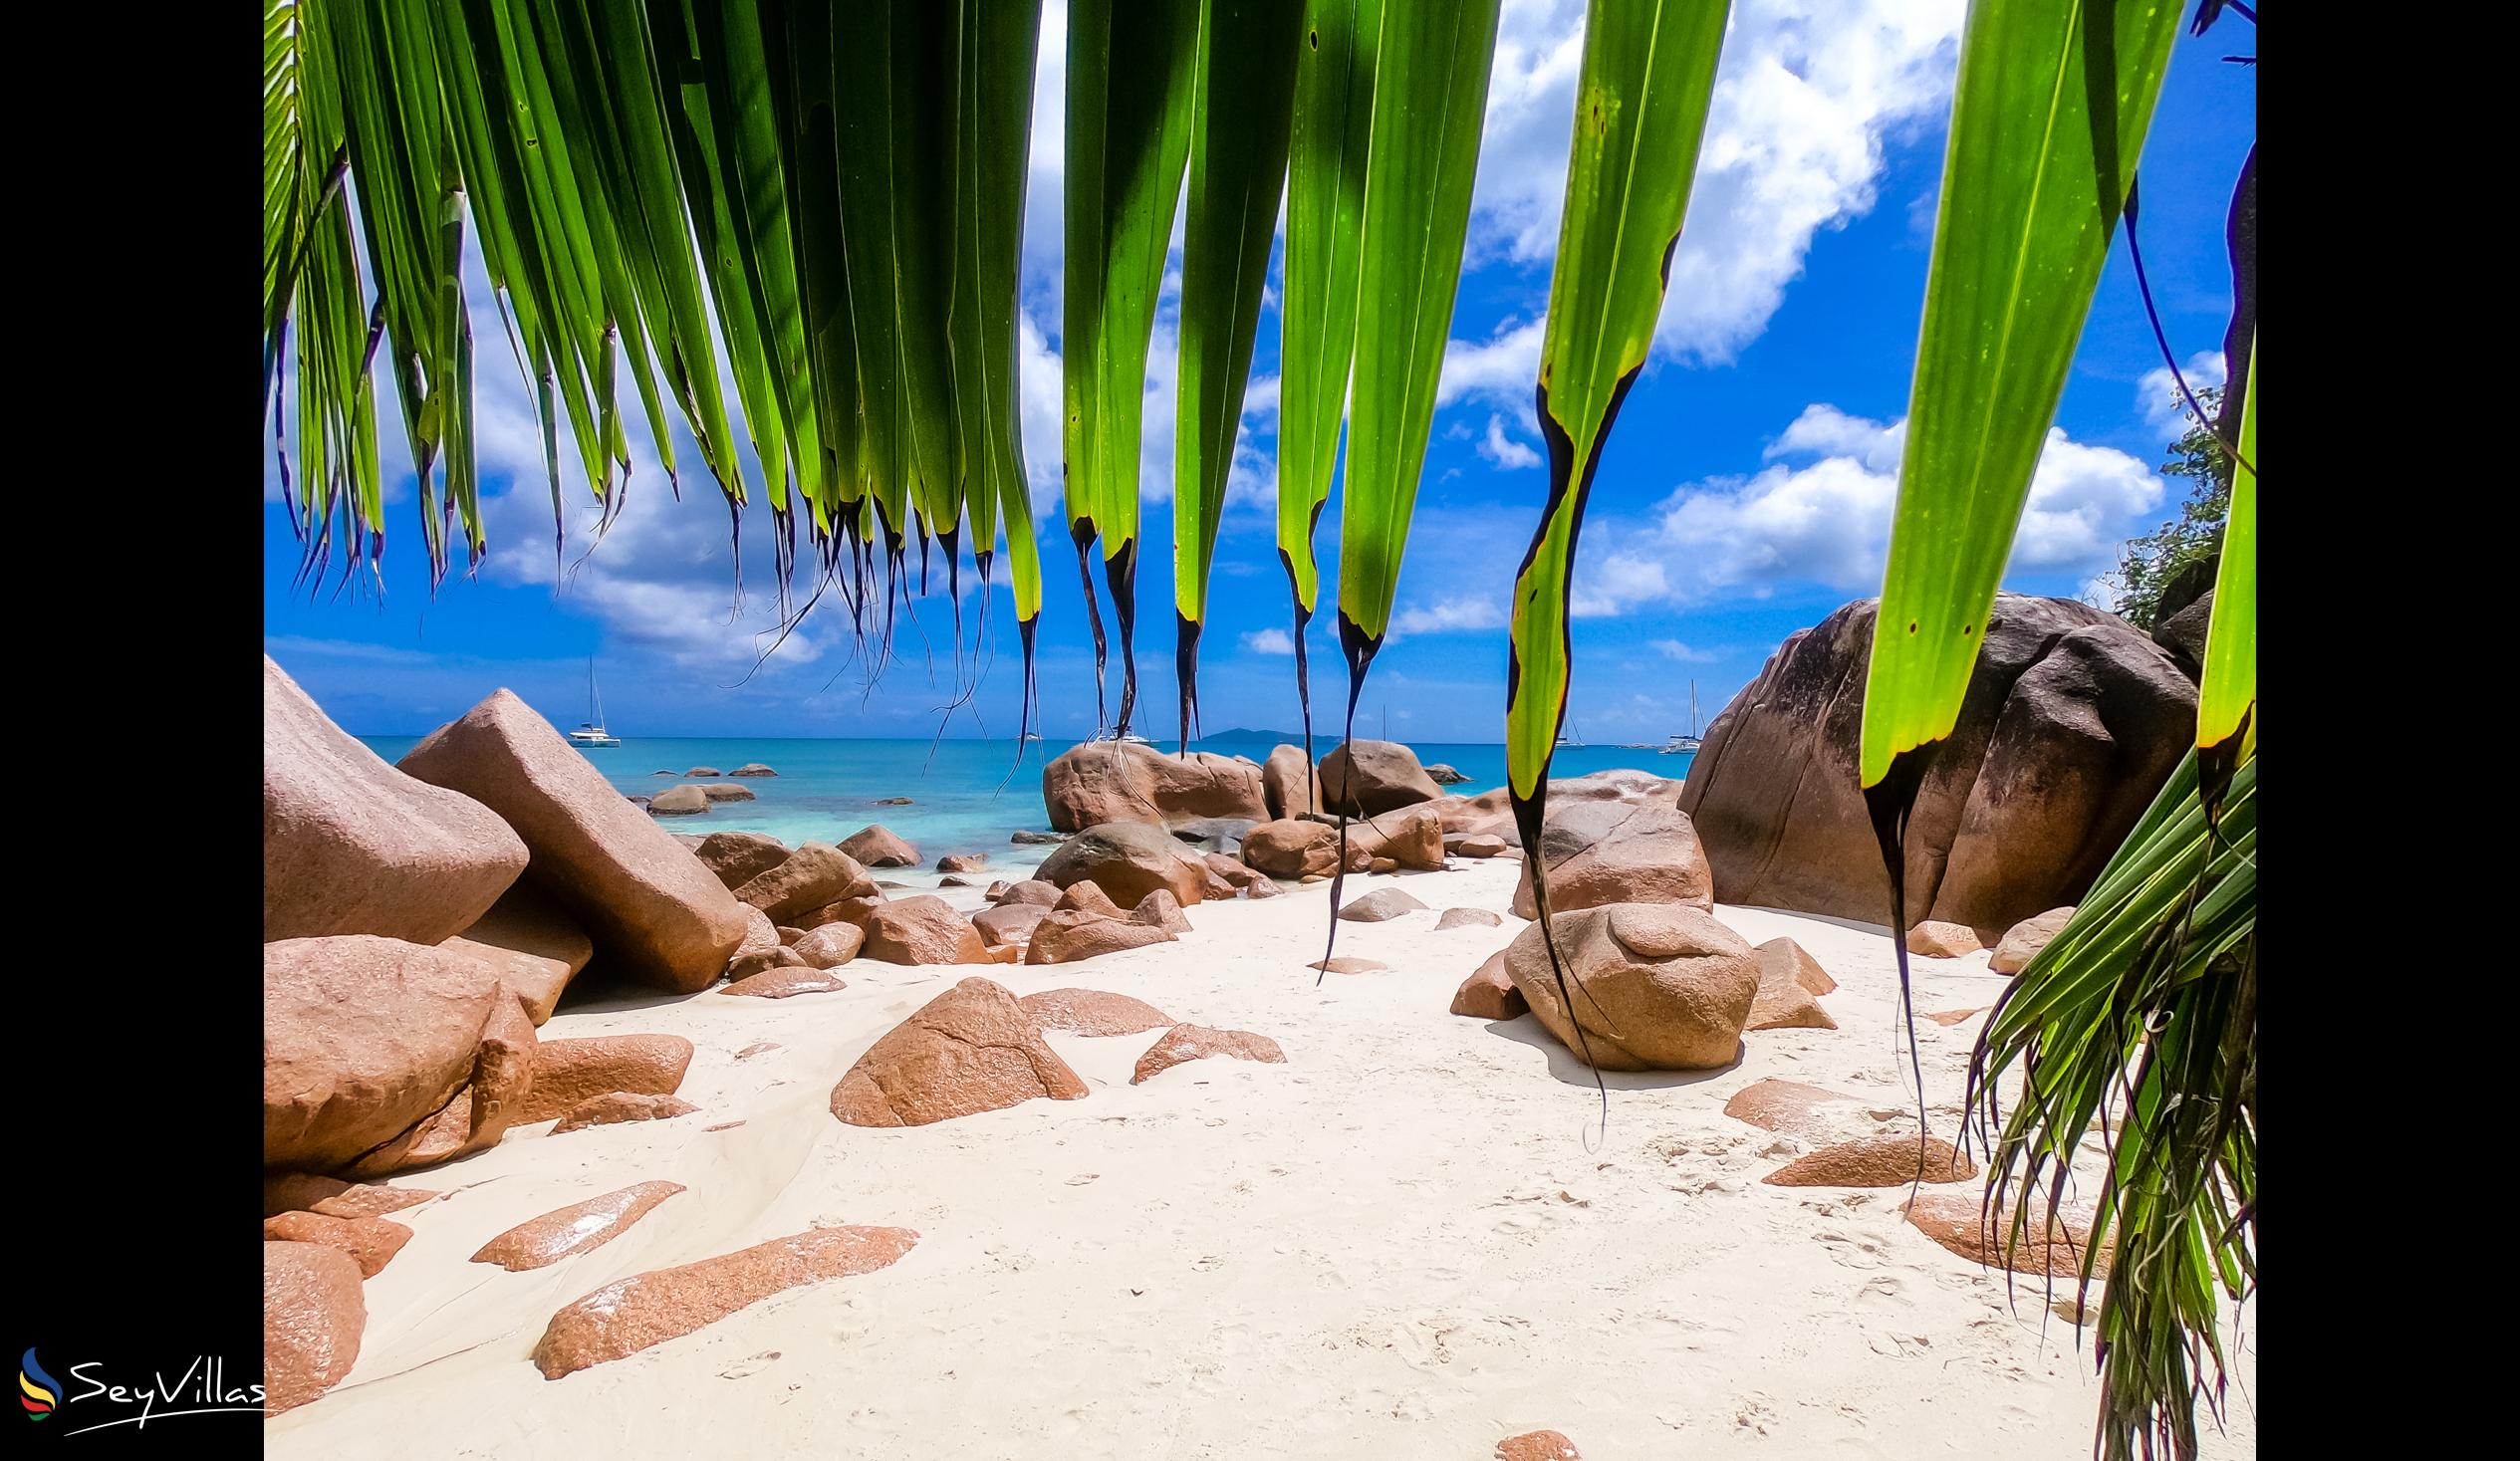 Photo 27: Dream Yacht Silhouette Dream Premium - Beaches - Seychelles (Seychelles)